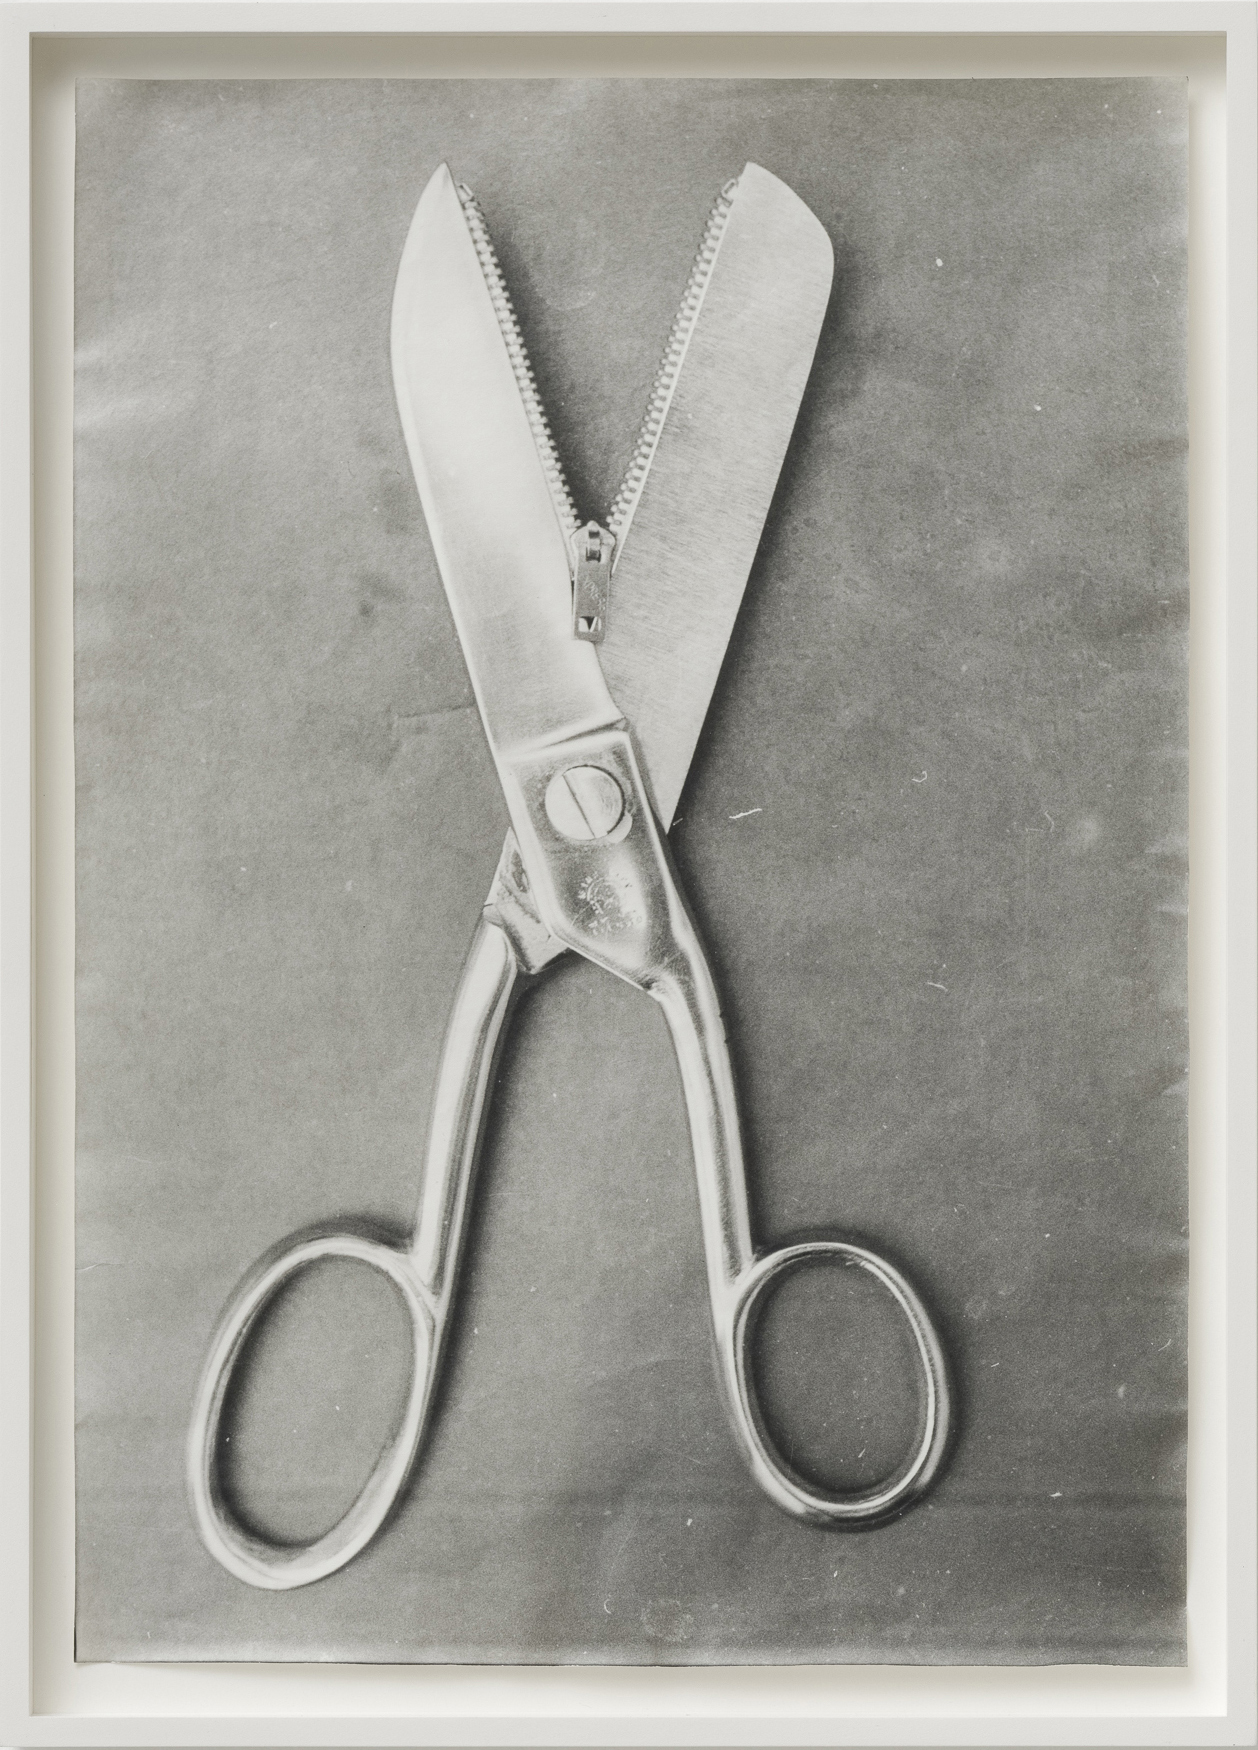 Ferenc Ficzek, Untitled (Scissors), 1977, silver gelatin print on Dokubrom paper, 45,5 x 33 cm. Photo: Marcus Schneider